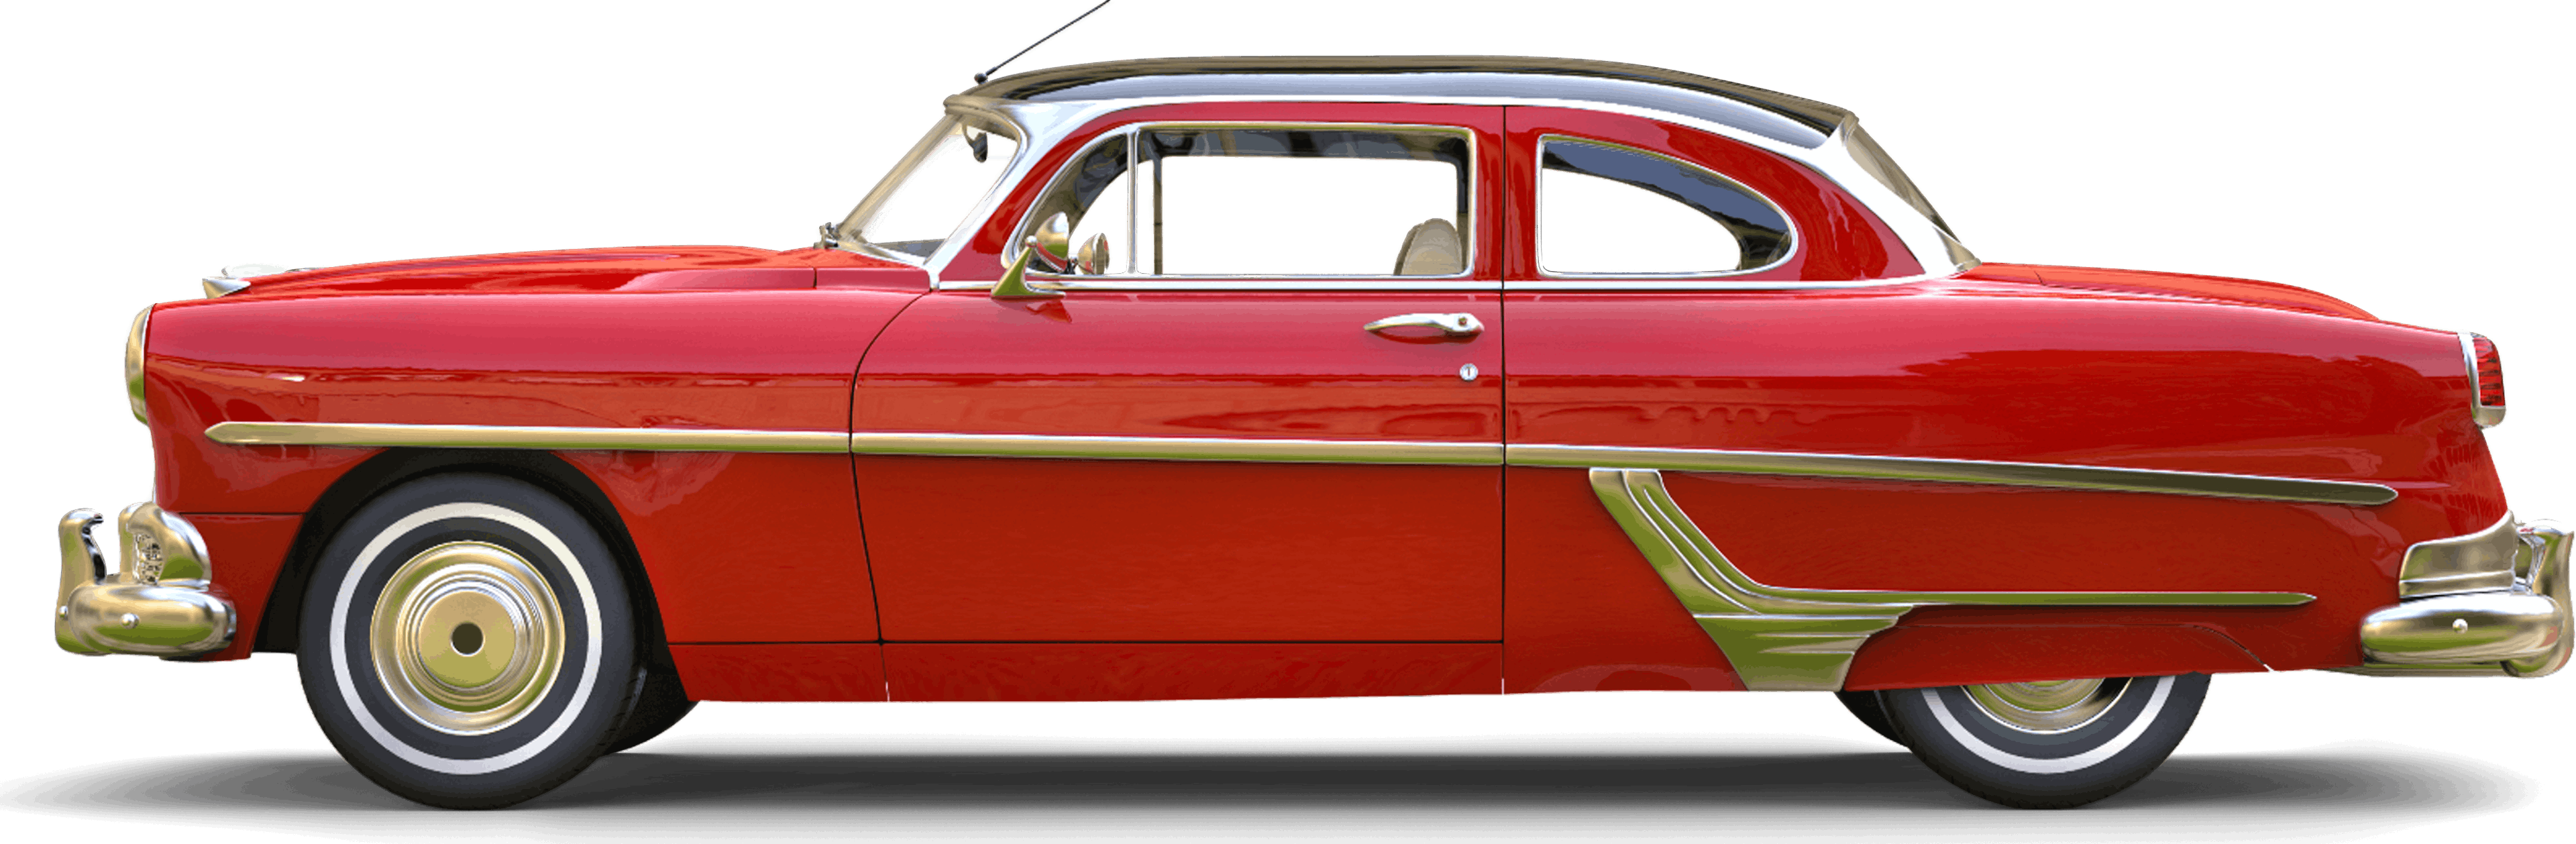 classic cuban car